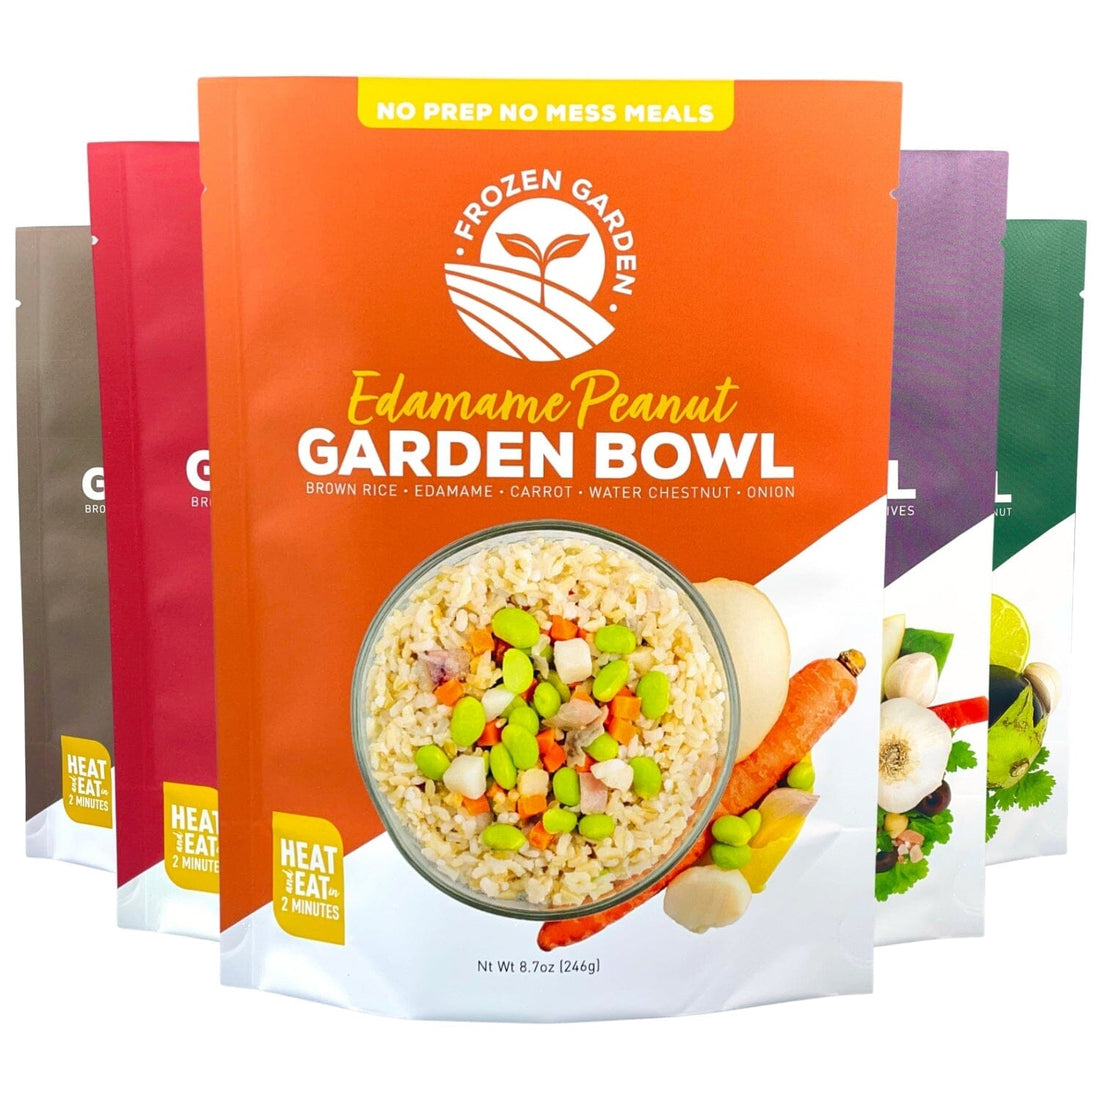 Garden Bowl Variety Pack - Frozen Garden - vegetarian bowls - grain bowl - vegan bowl